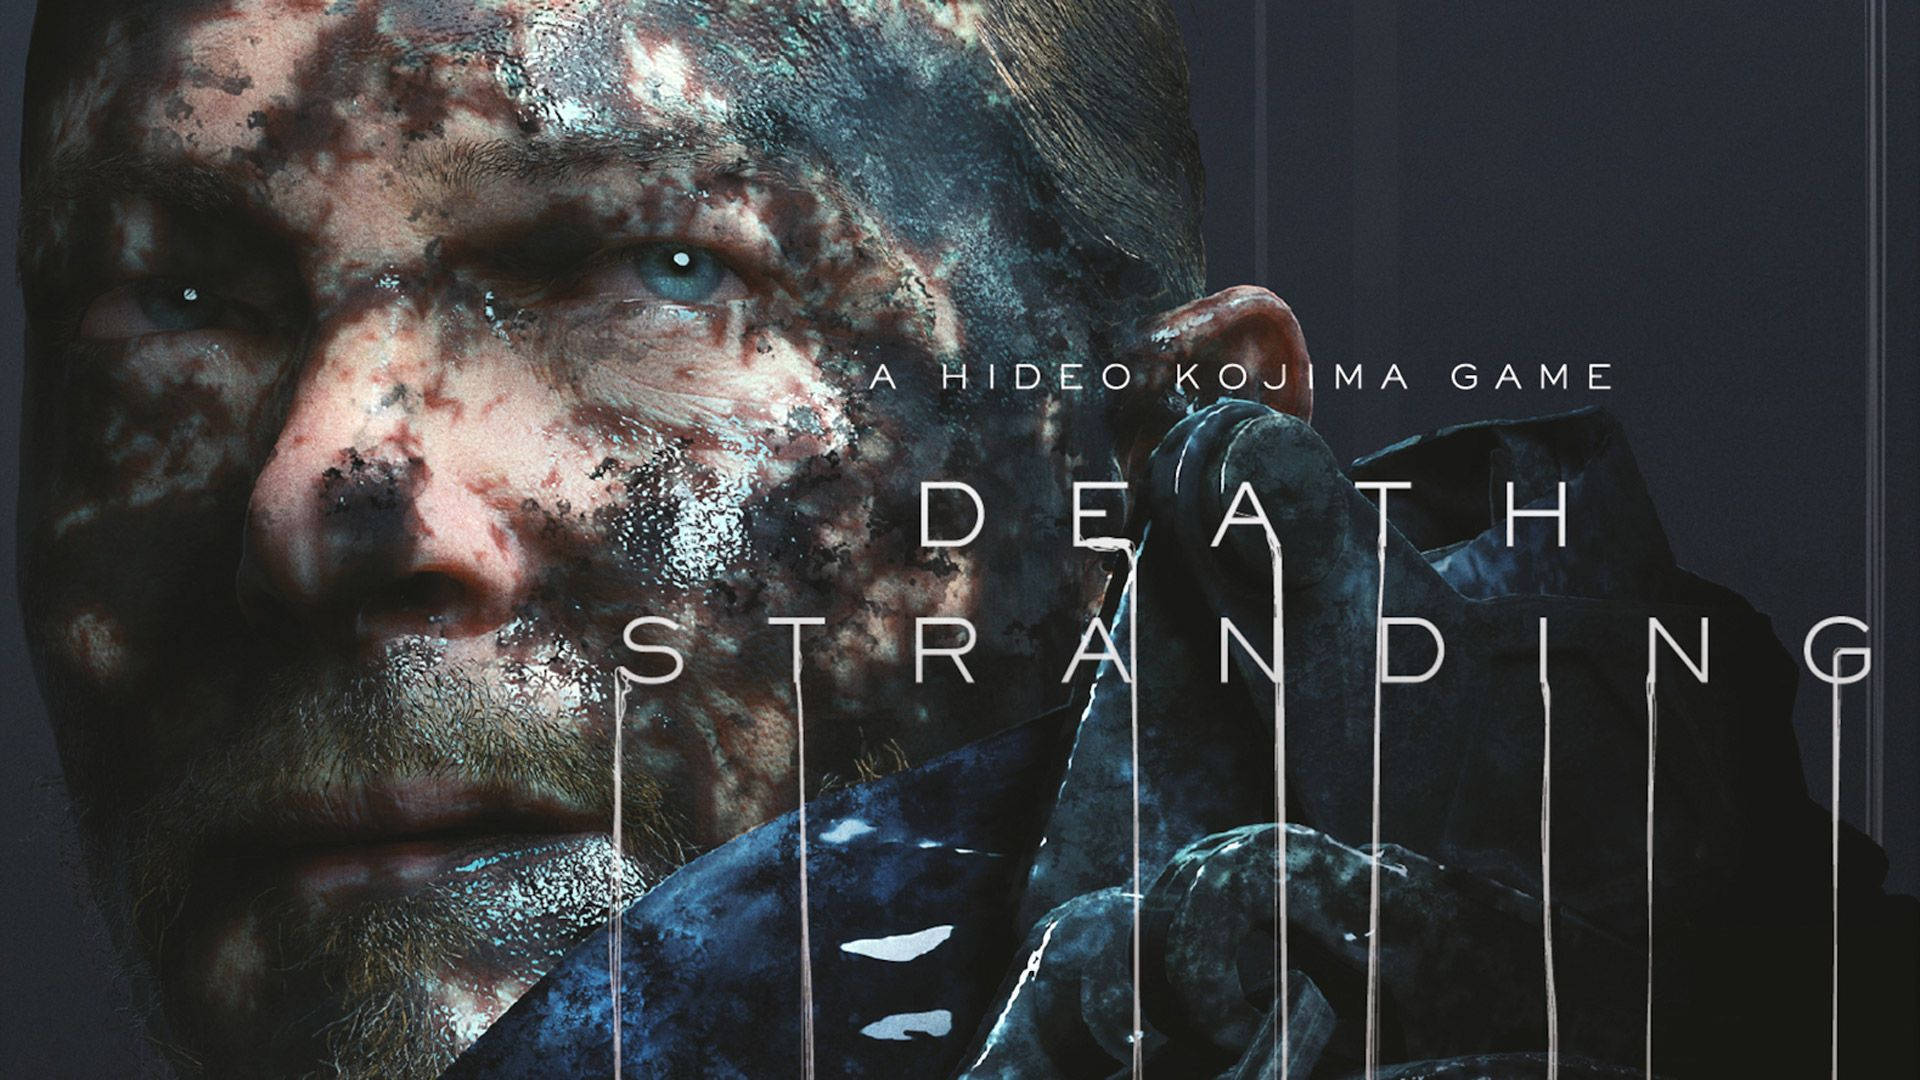 Death Stranding 1920x1080 Hideo Kojima Game Wallpaper